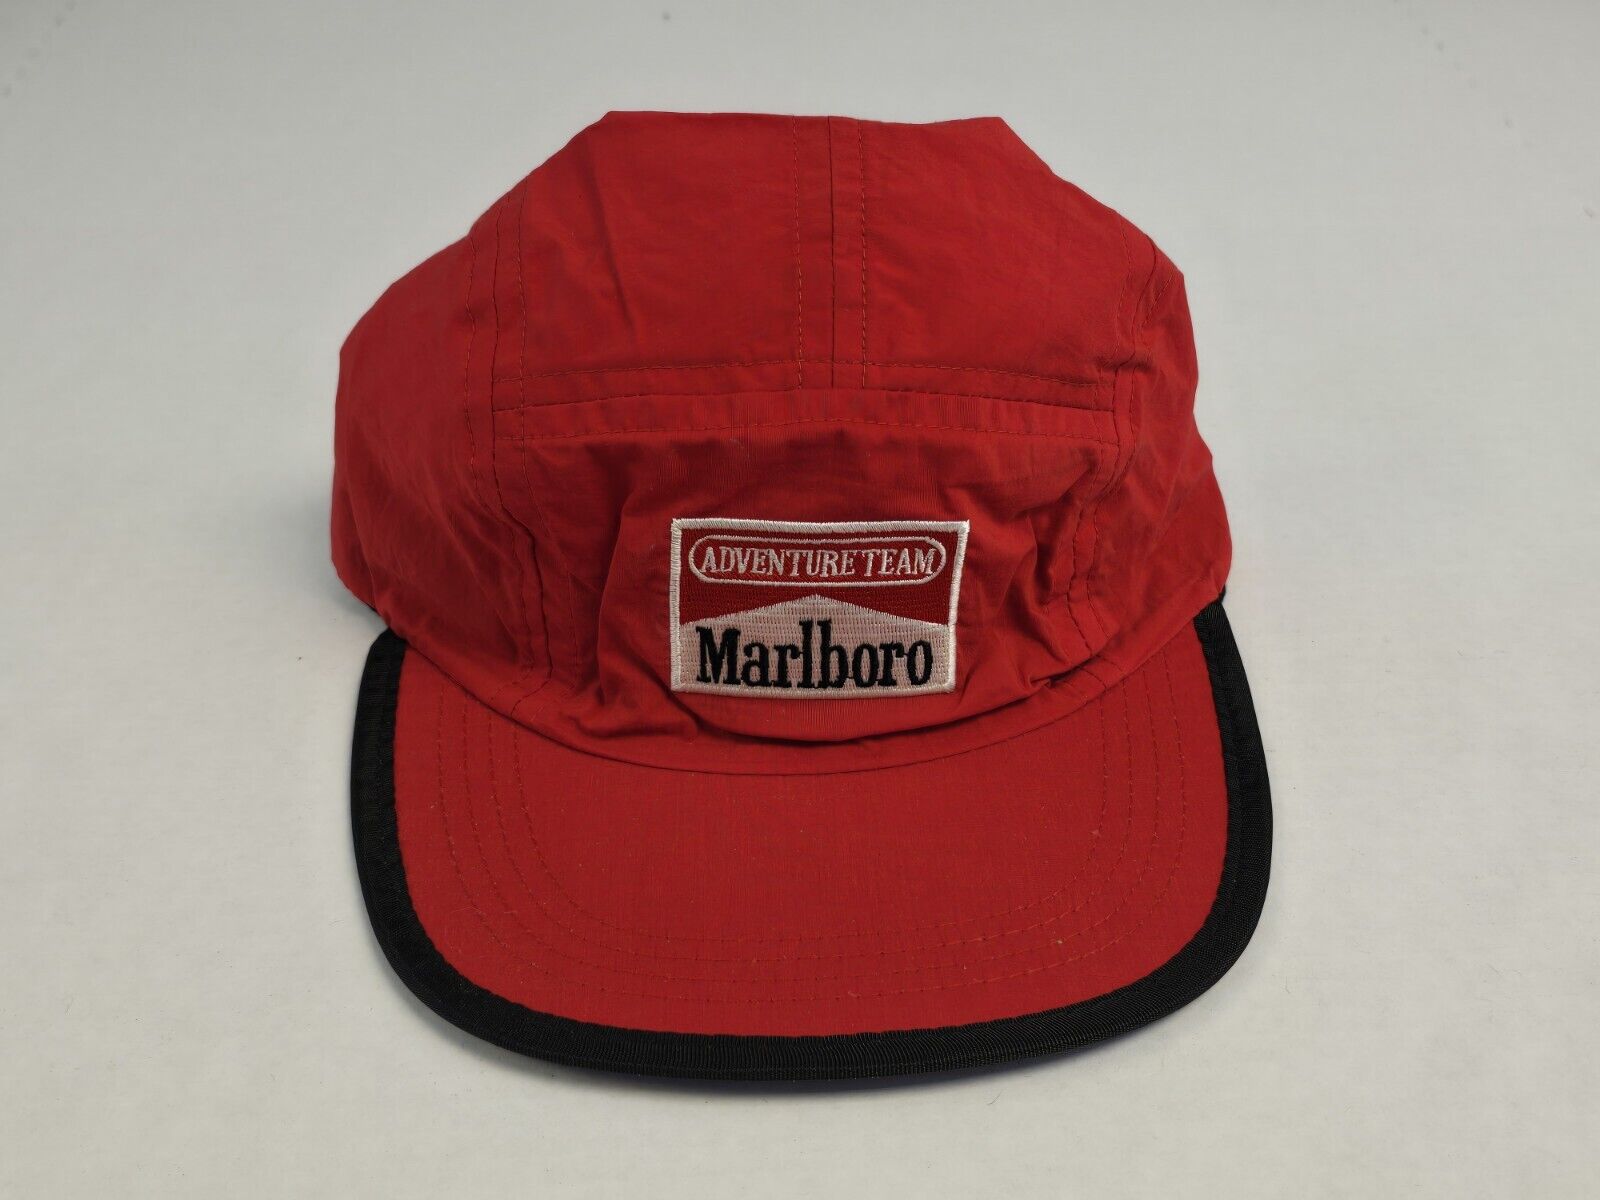 VTG Marlboro Adventure Team Embroidered Snapback Hat Cap Strapback Red Cycling